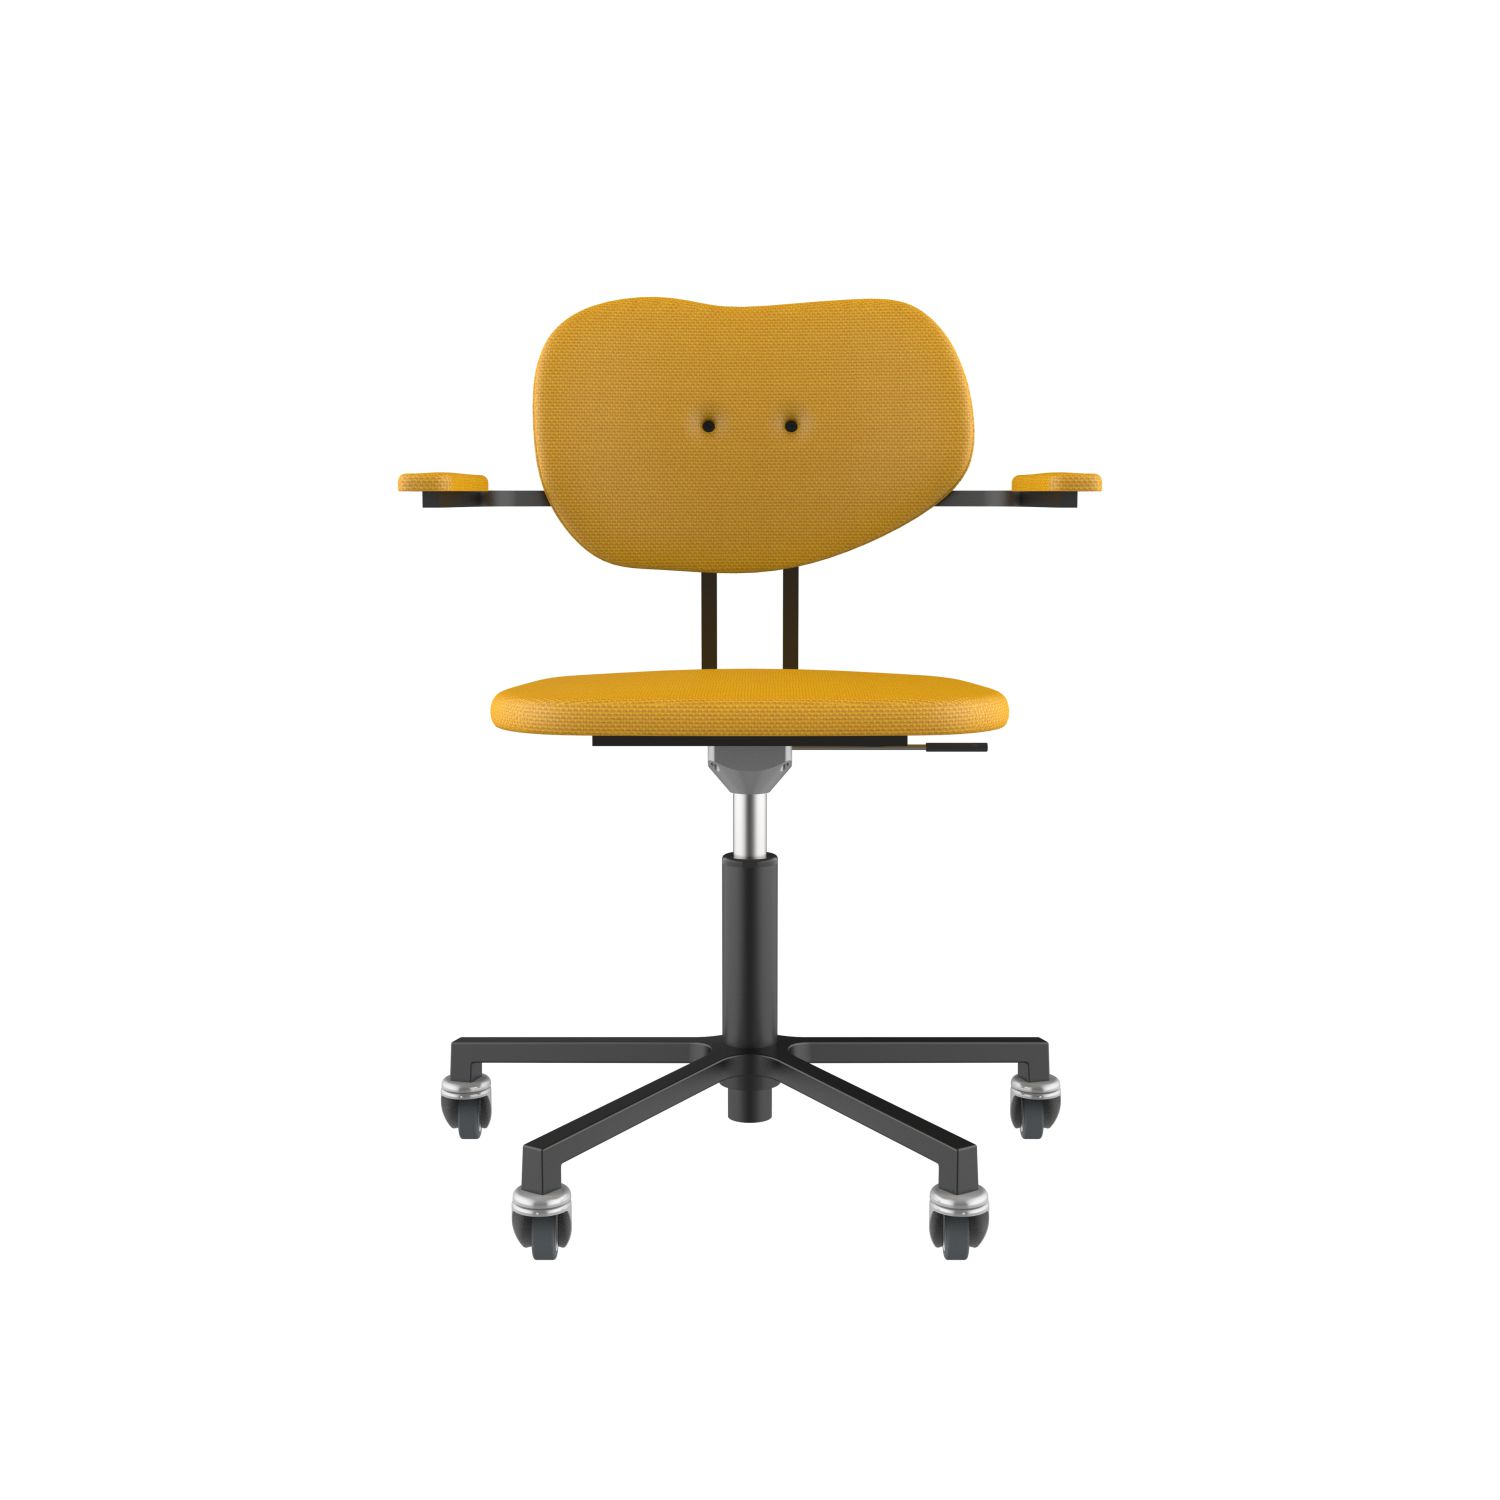 lensvelt maarten baas office chair with armrests backrest b lemon yellow 051 black ral9005 soft wheels